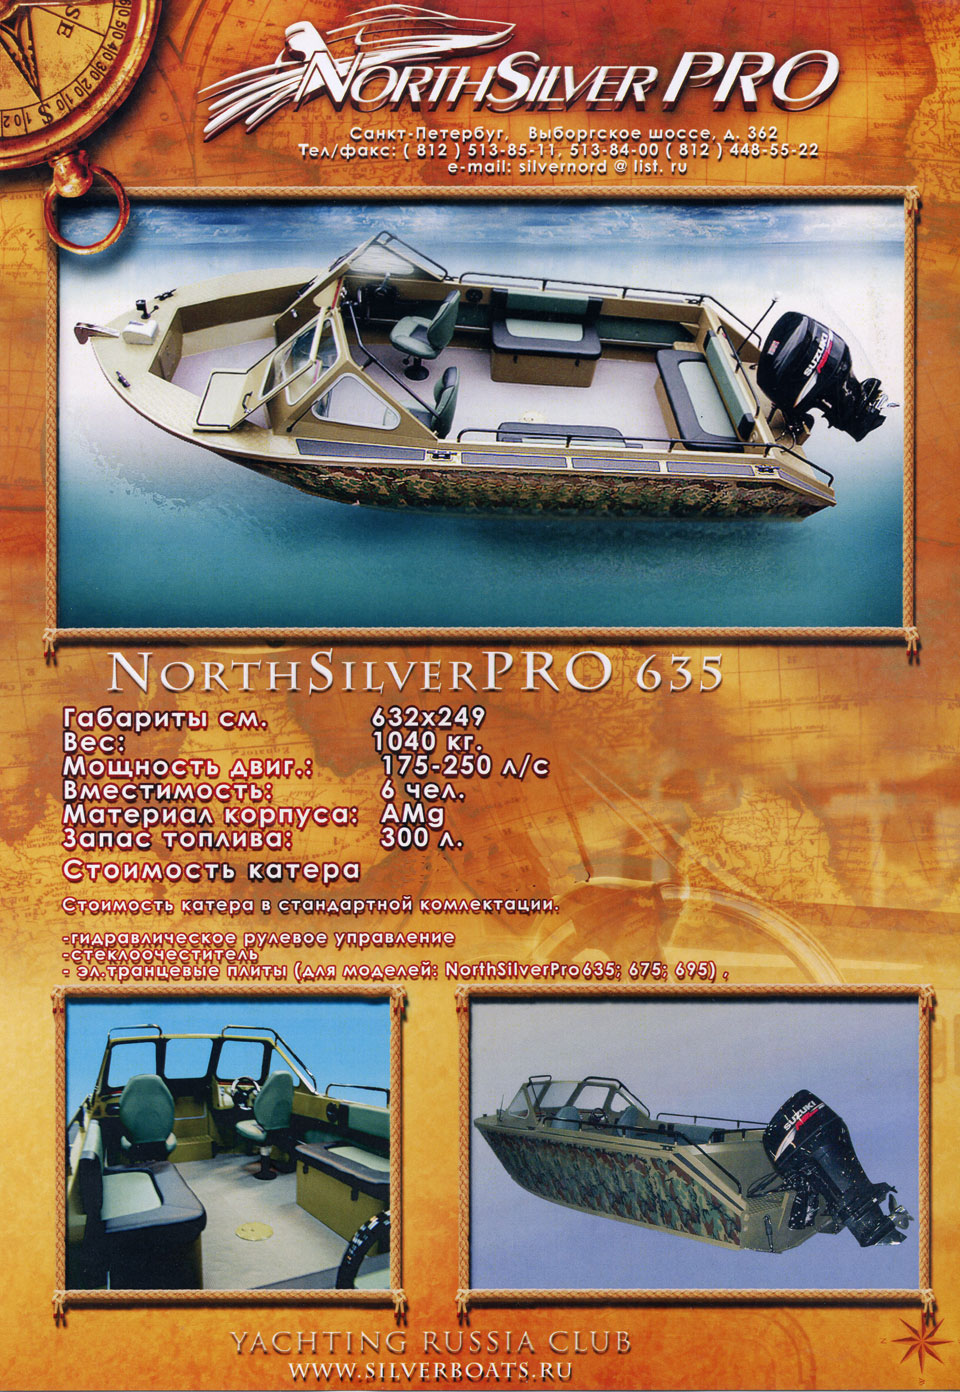  NorthSilver Pro 635